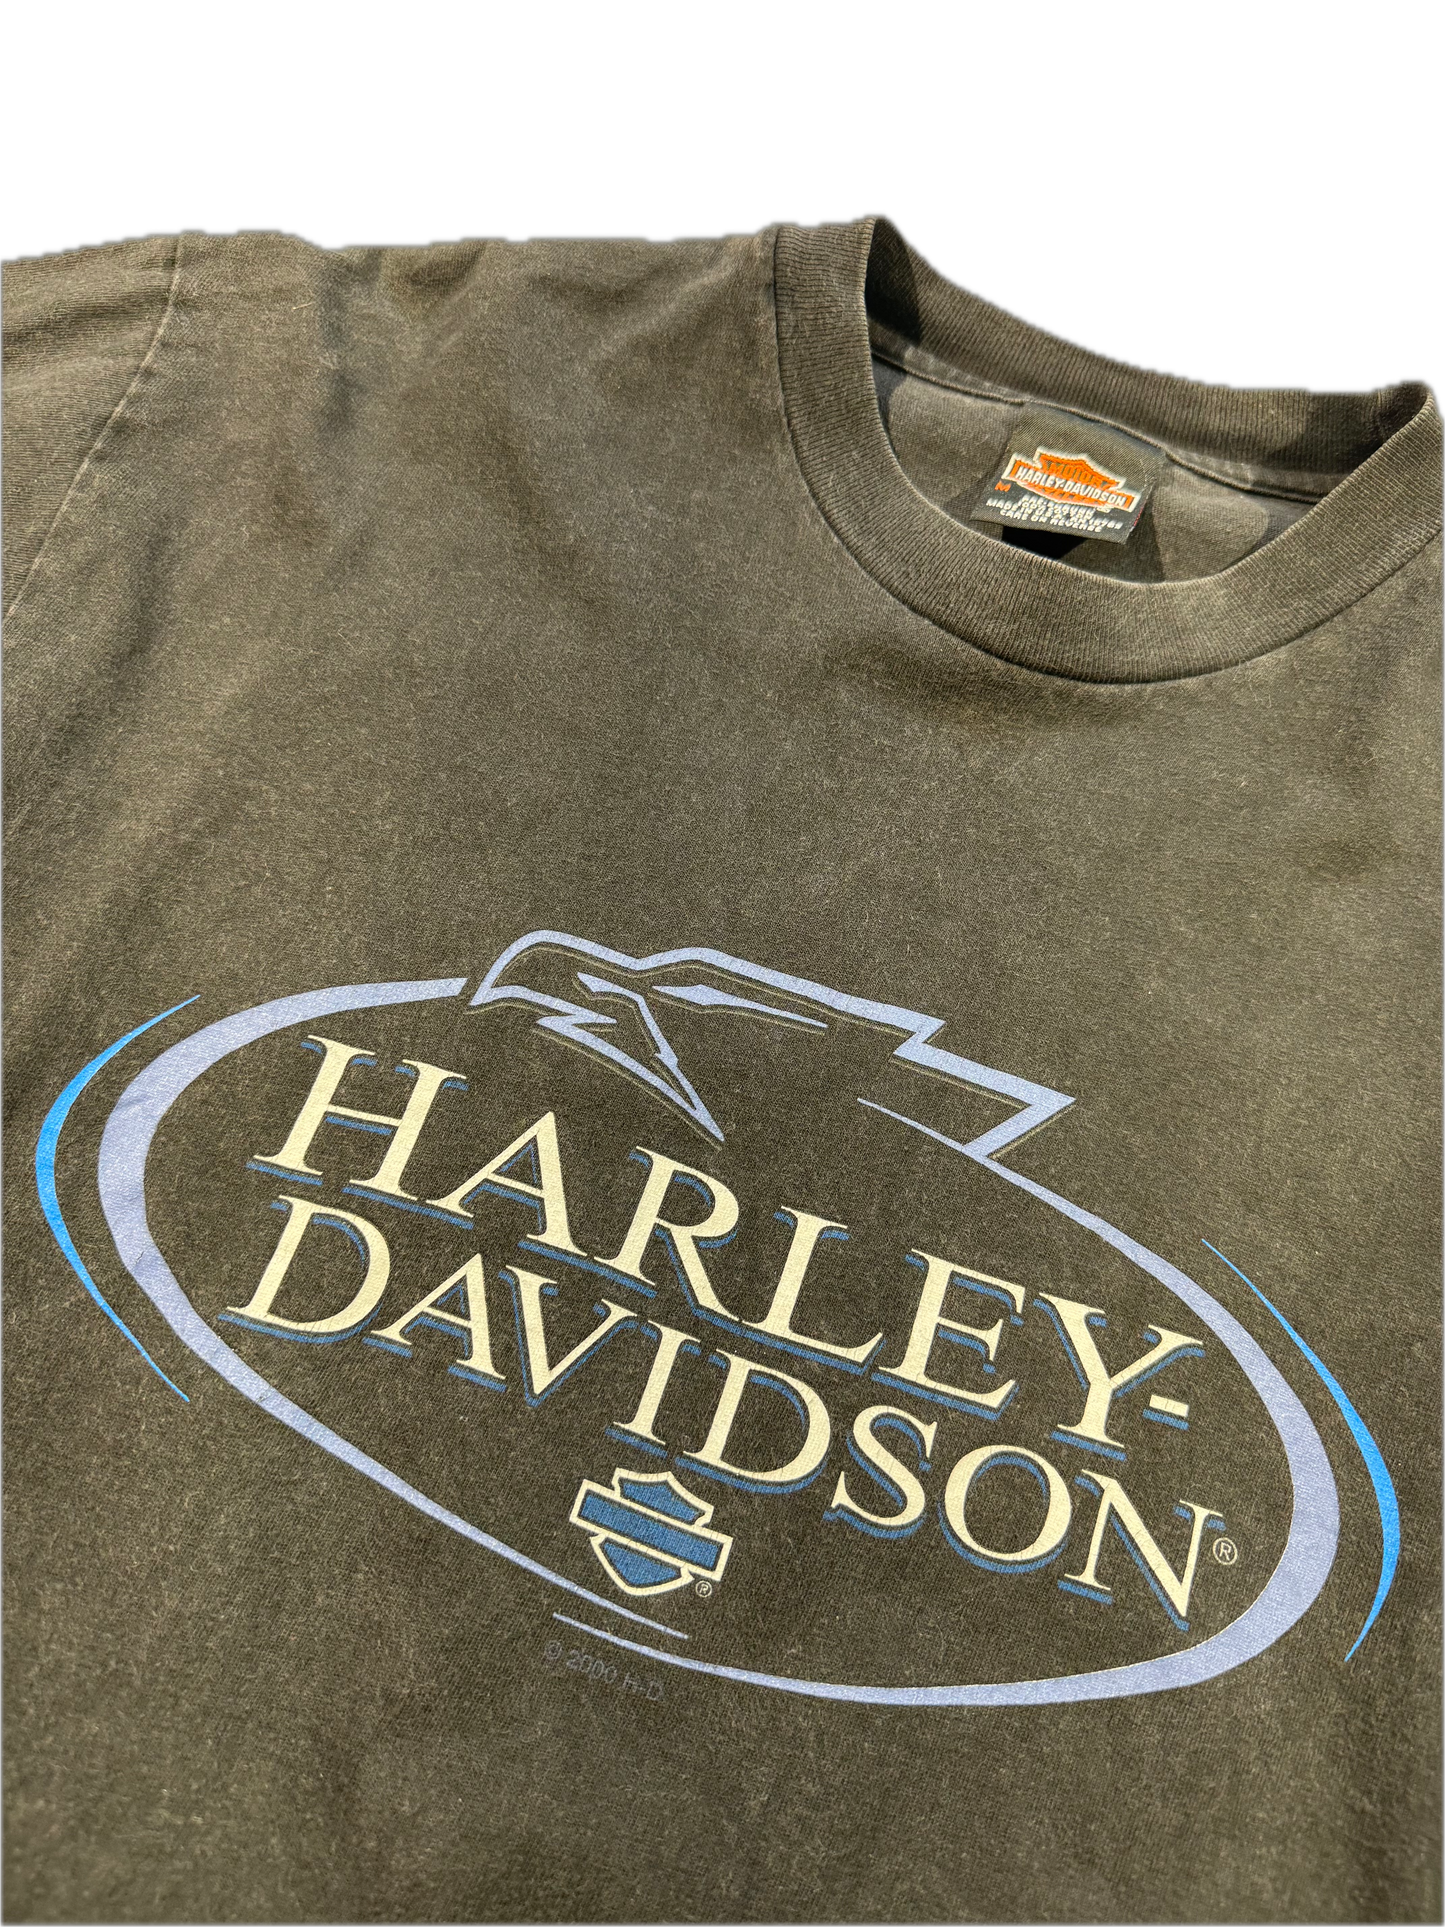 Vintage Harley Davidson T-Shirt Home Of The Big Iron